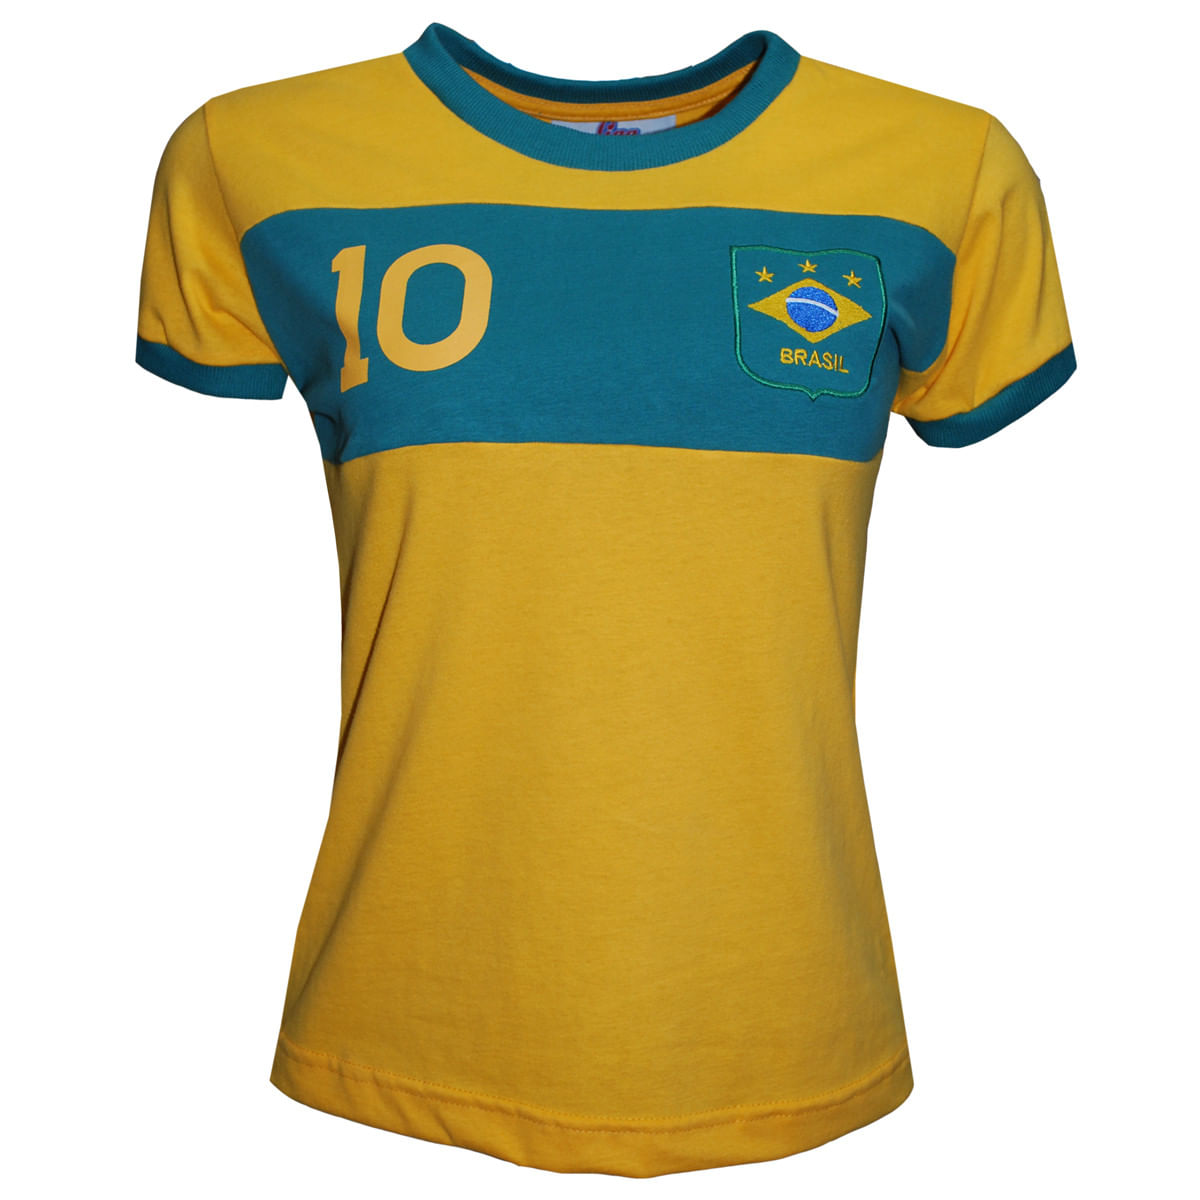 Camisa do Brasil, da Liga Retrô